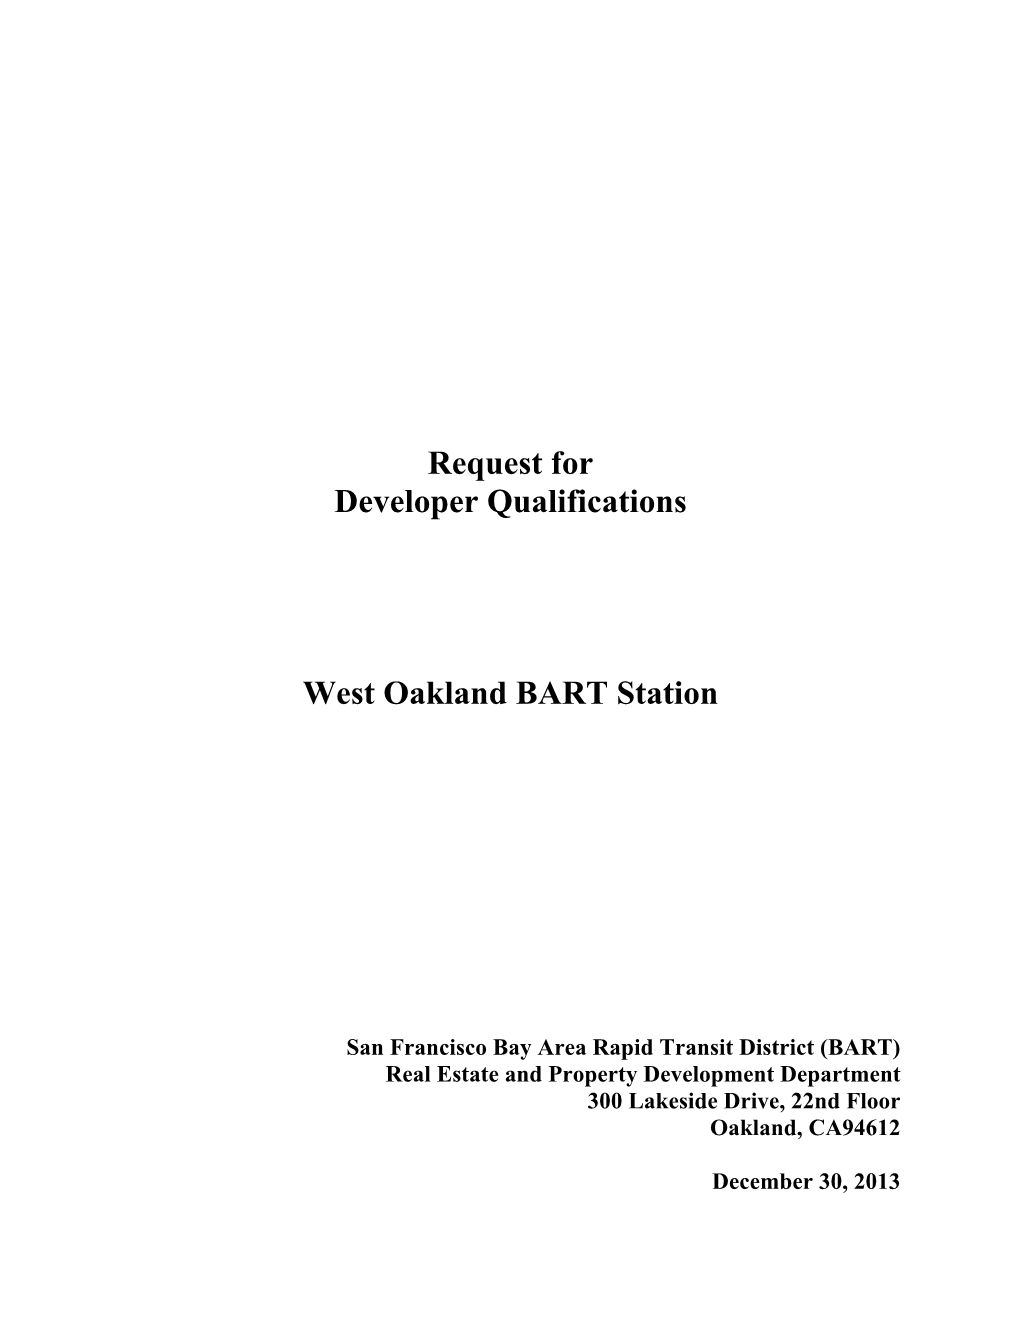 Request for Developer Qualifications West Oakland BART Station